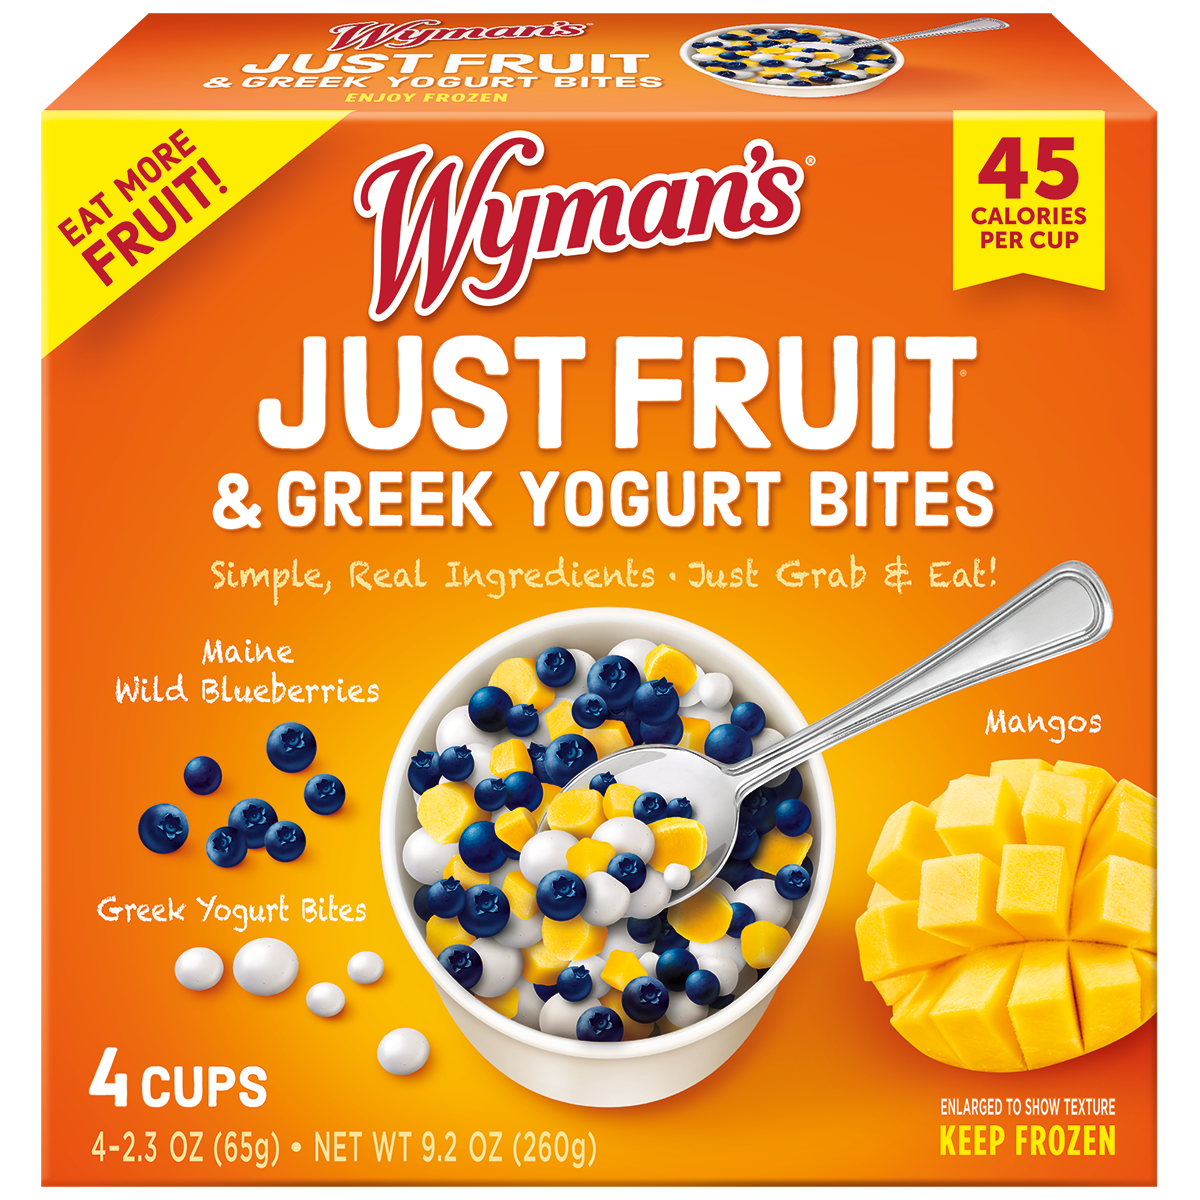 Just Fruit – Wild Blueberries & Mangos